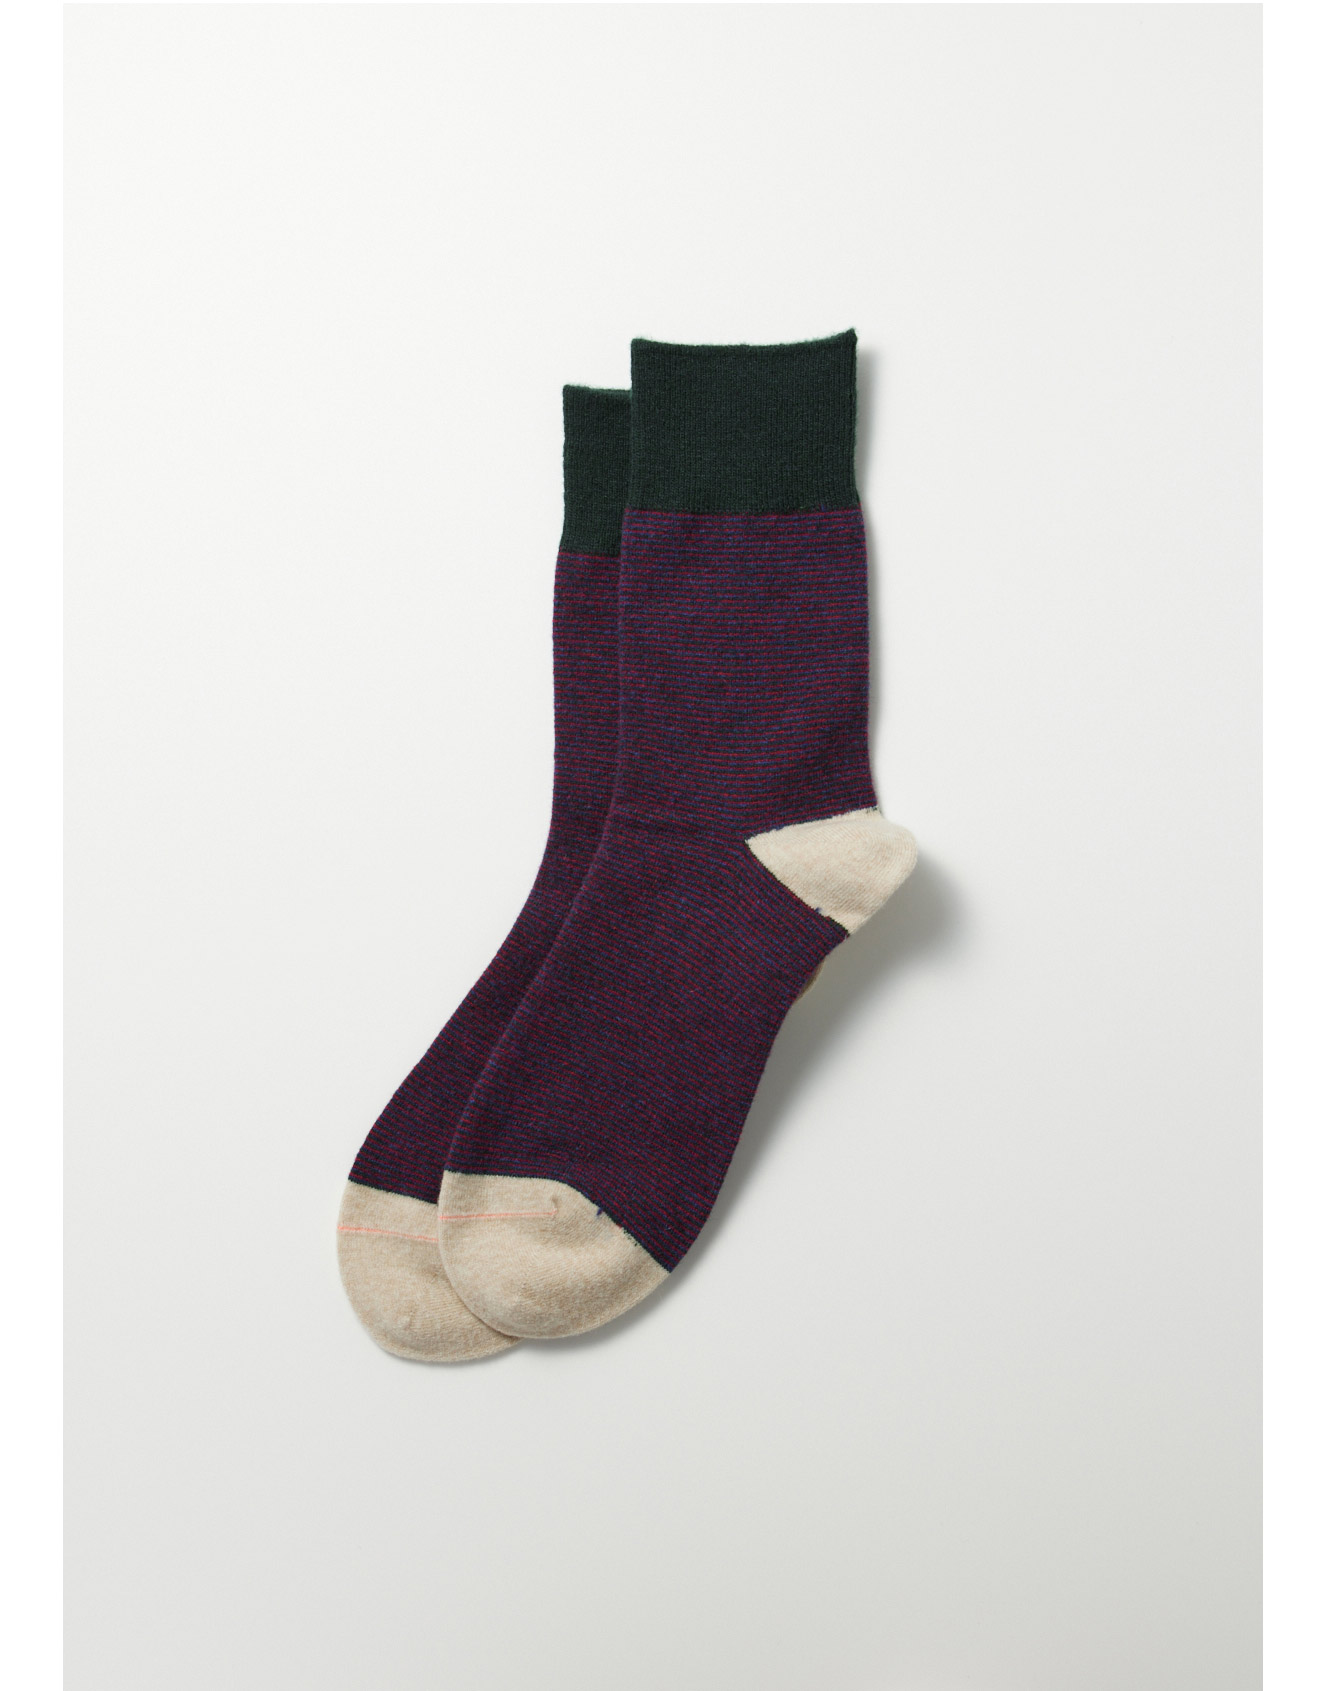 RoToTo – Woolen Retro OD Stripe Socks